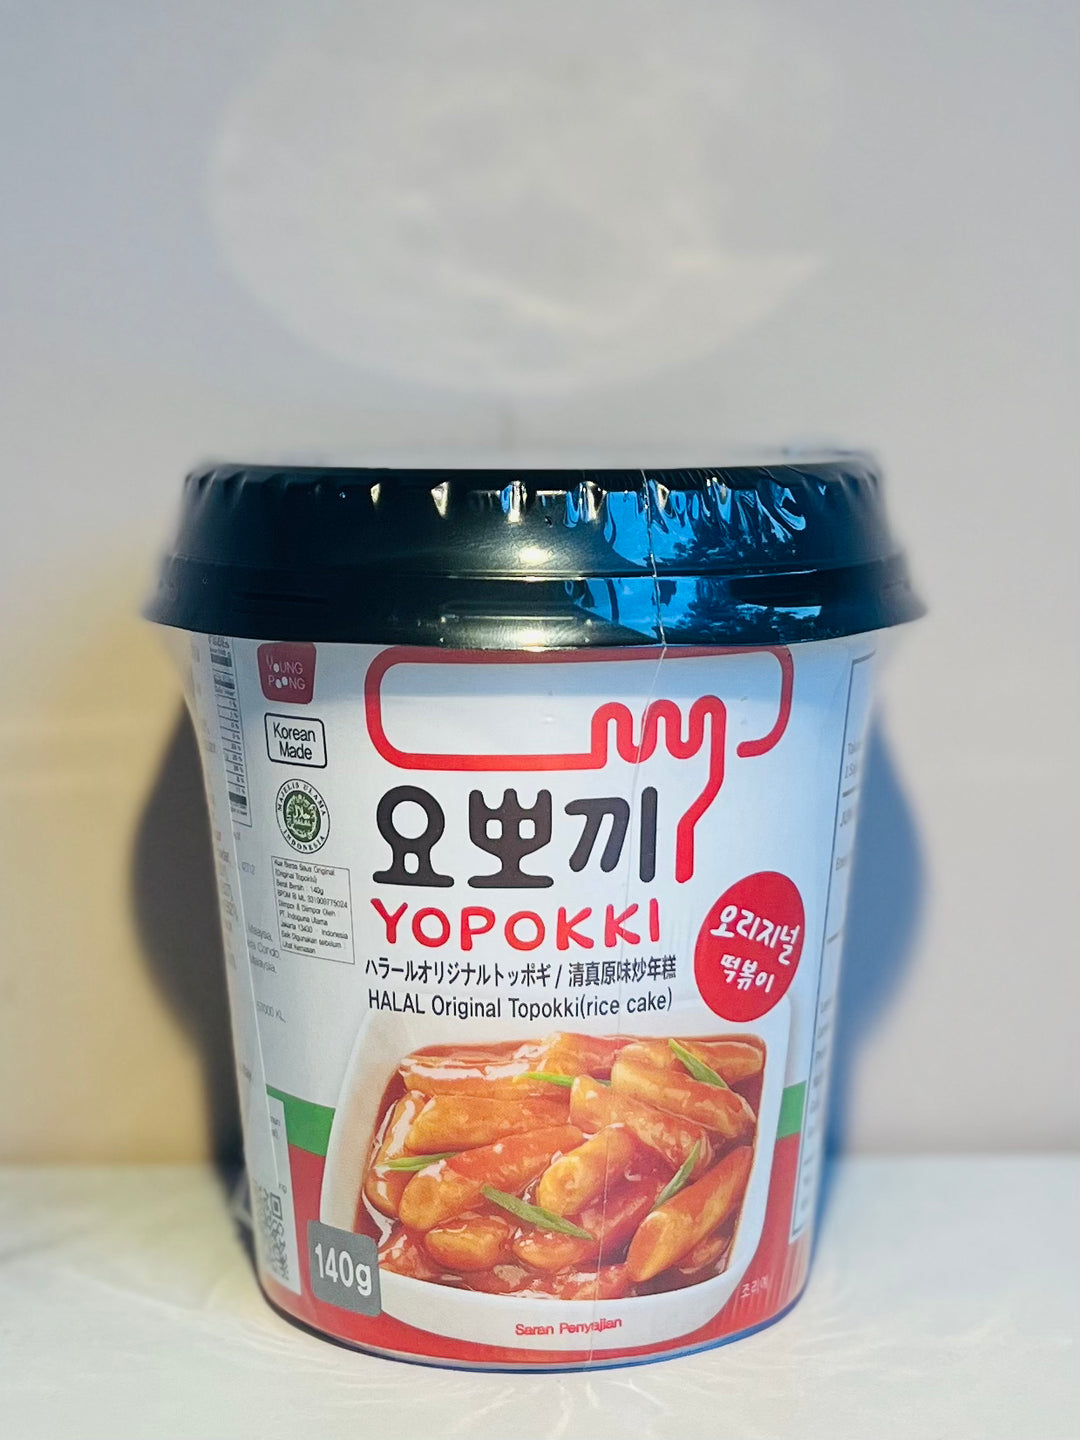 Yongpoong Yopokki Halal Topokki Original Flavour 140g 清真原味炒年糕